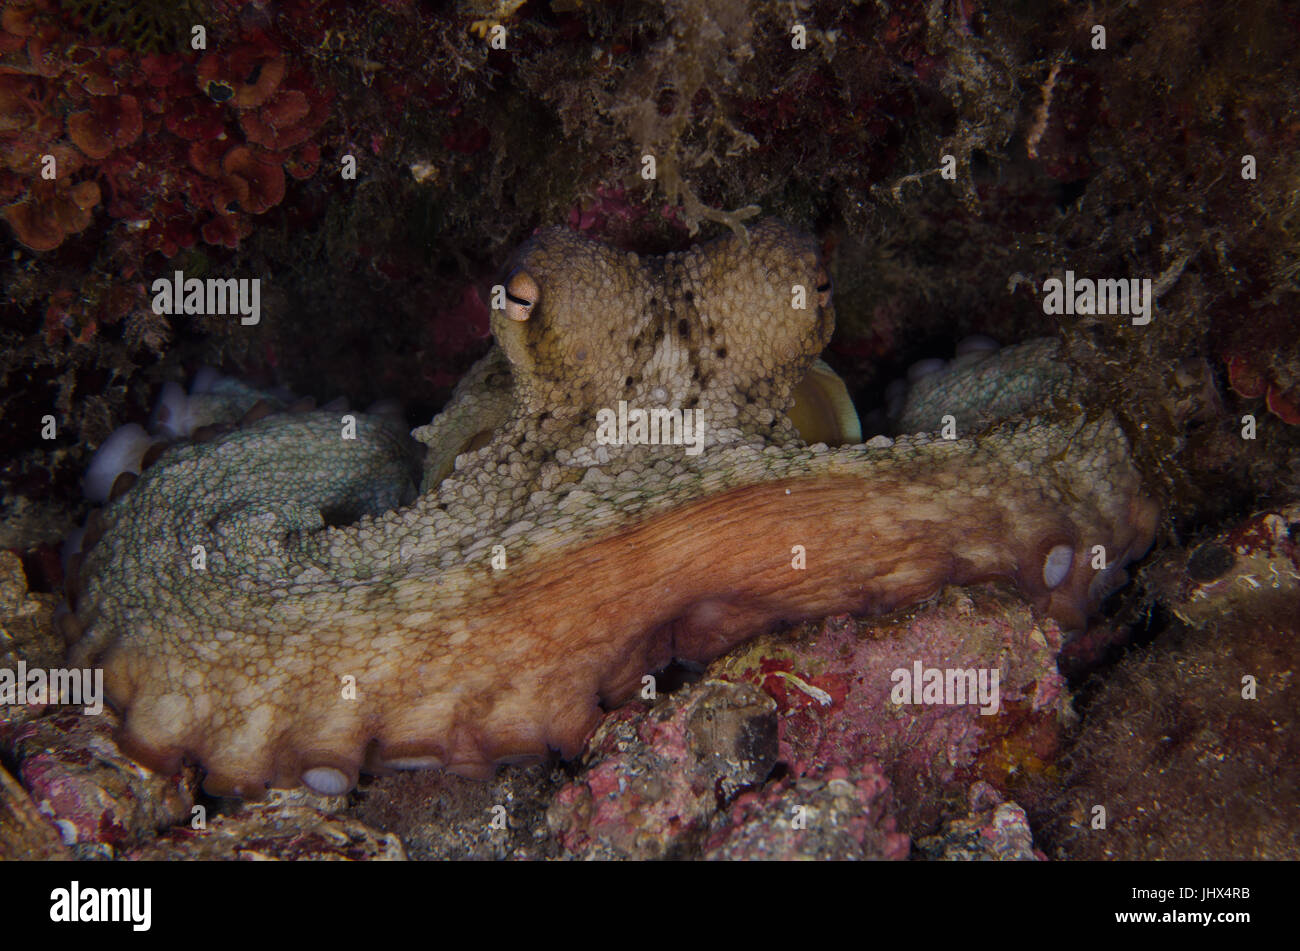 Common octopus, Octopus octopus, Mollusca Decapoda, Tor Paterno Marine Protected Area, Rome, Lazio, Italy, Mediterranean Sea Stock Photo